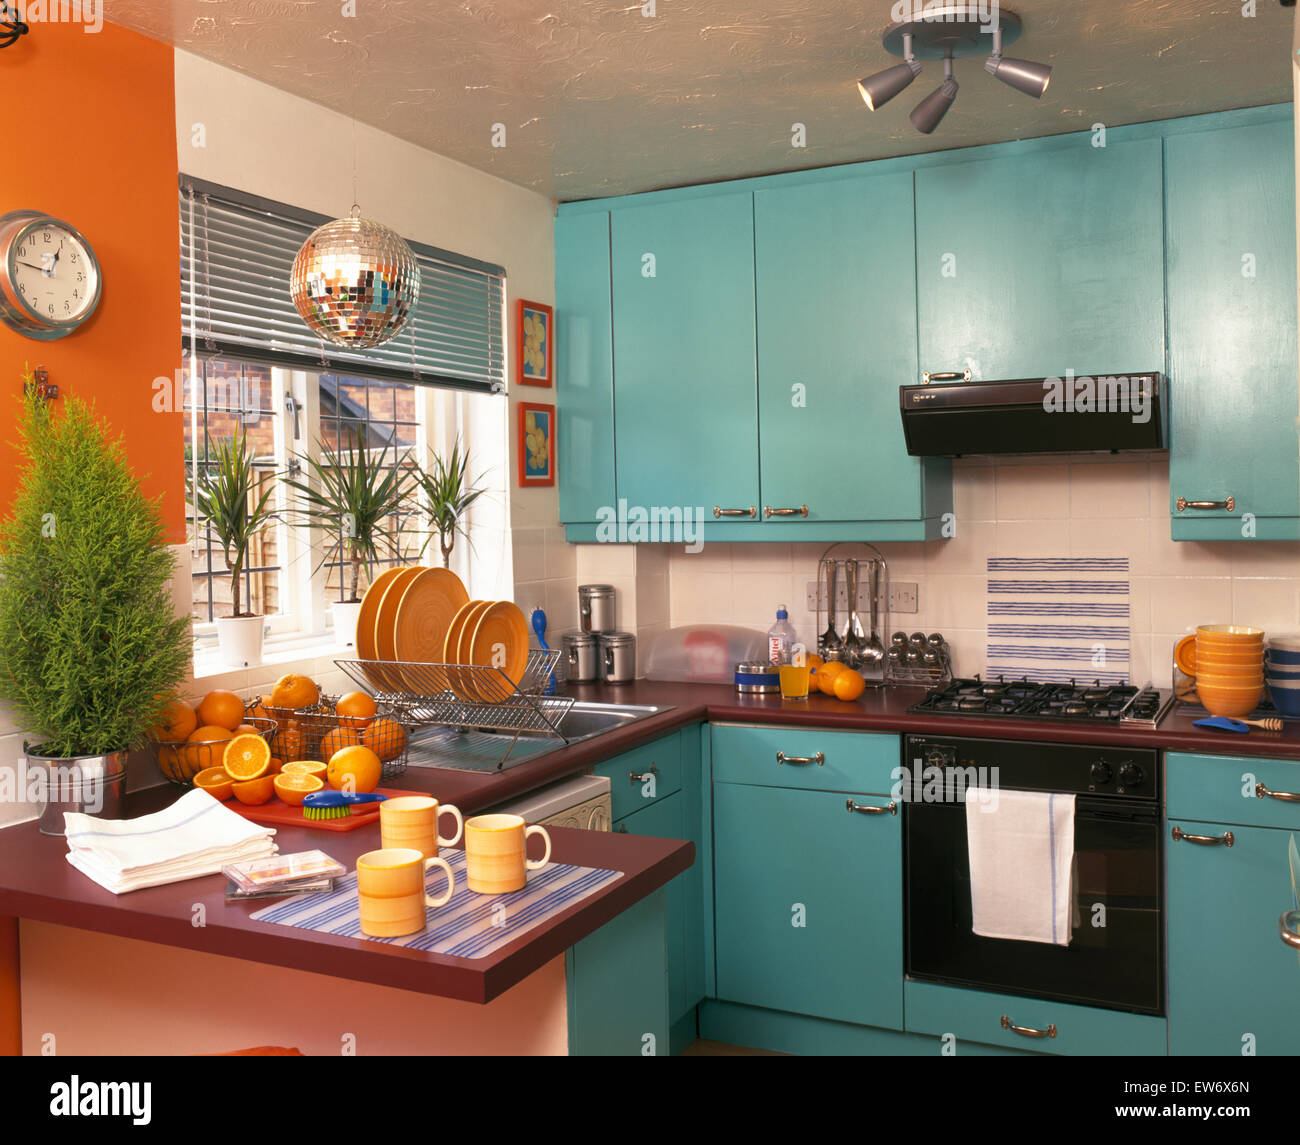 https://c8.alamy.com/comp/EW6X6N/yellow-crockery-in-nineties-economy-kitchen-with-turquoise-doors-on-EW6X6N.jpg